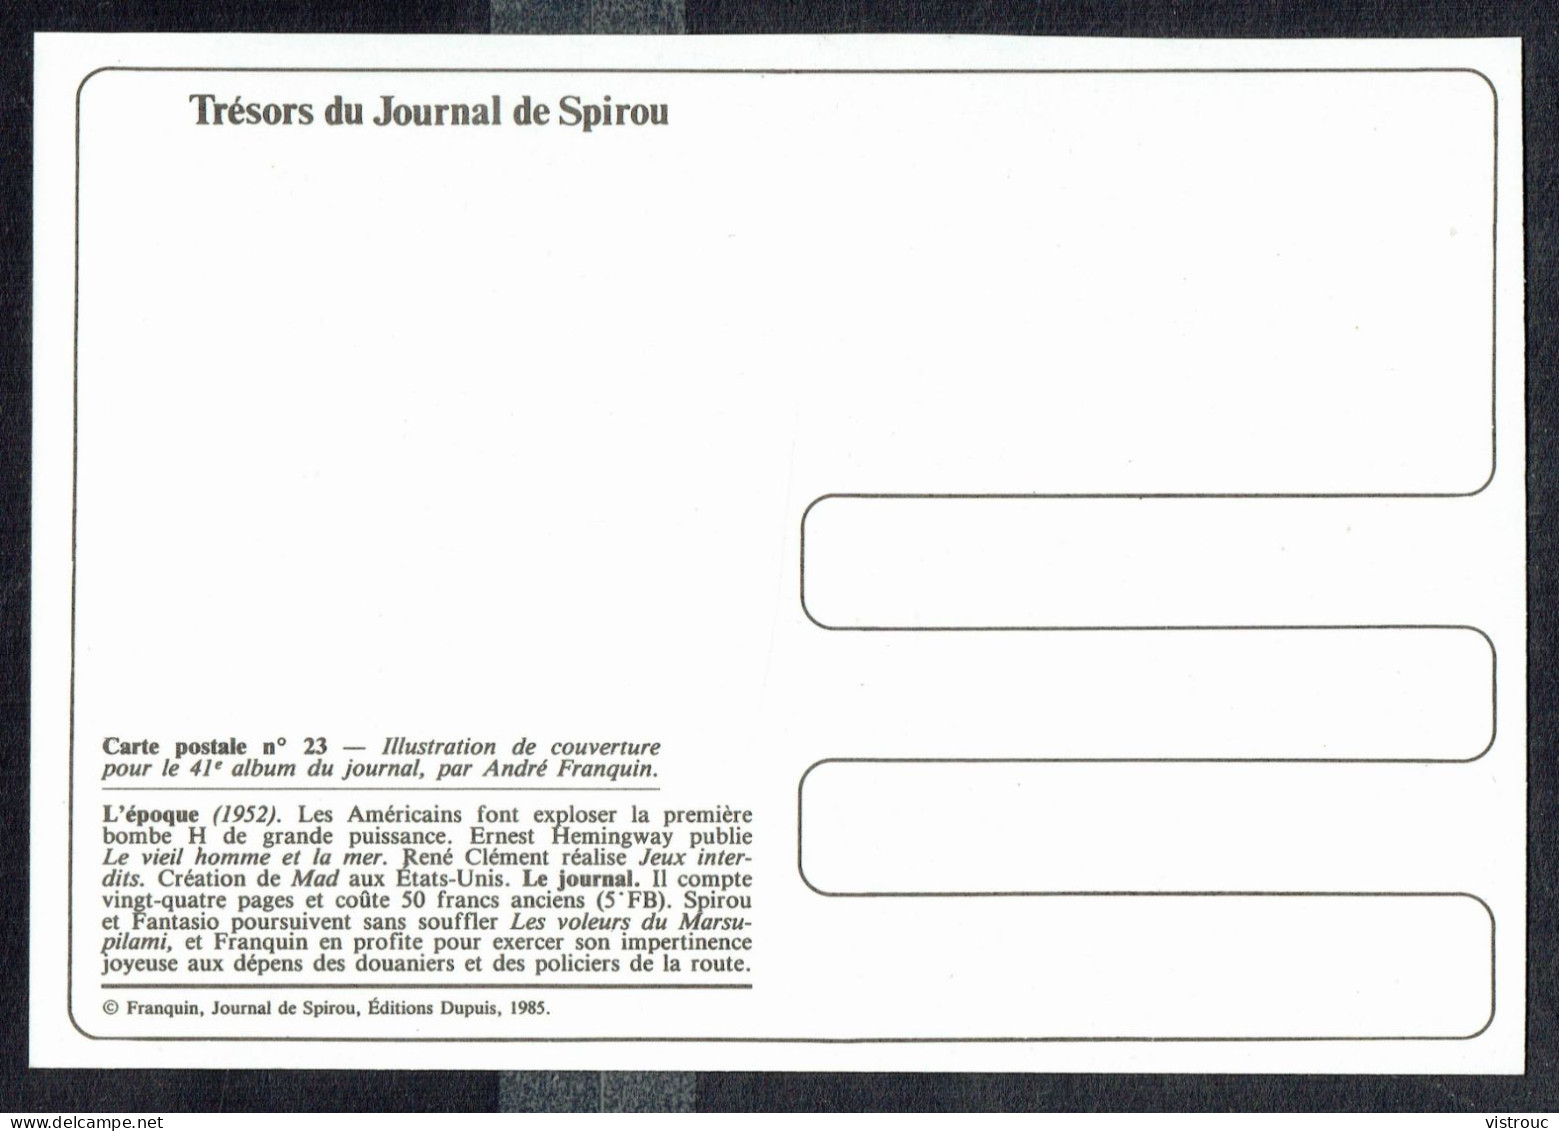 SPIROU - CP N° 23 : Illustration Couverture Album N° 41 De FRANQUIN - Non Circulé - Not Circulated - Ed. DUPUIS - 1985. - Comics